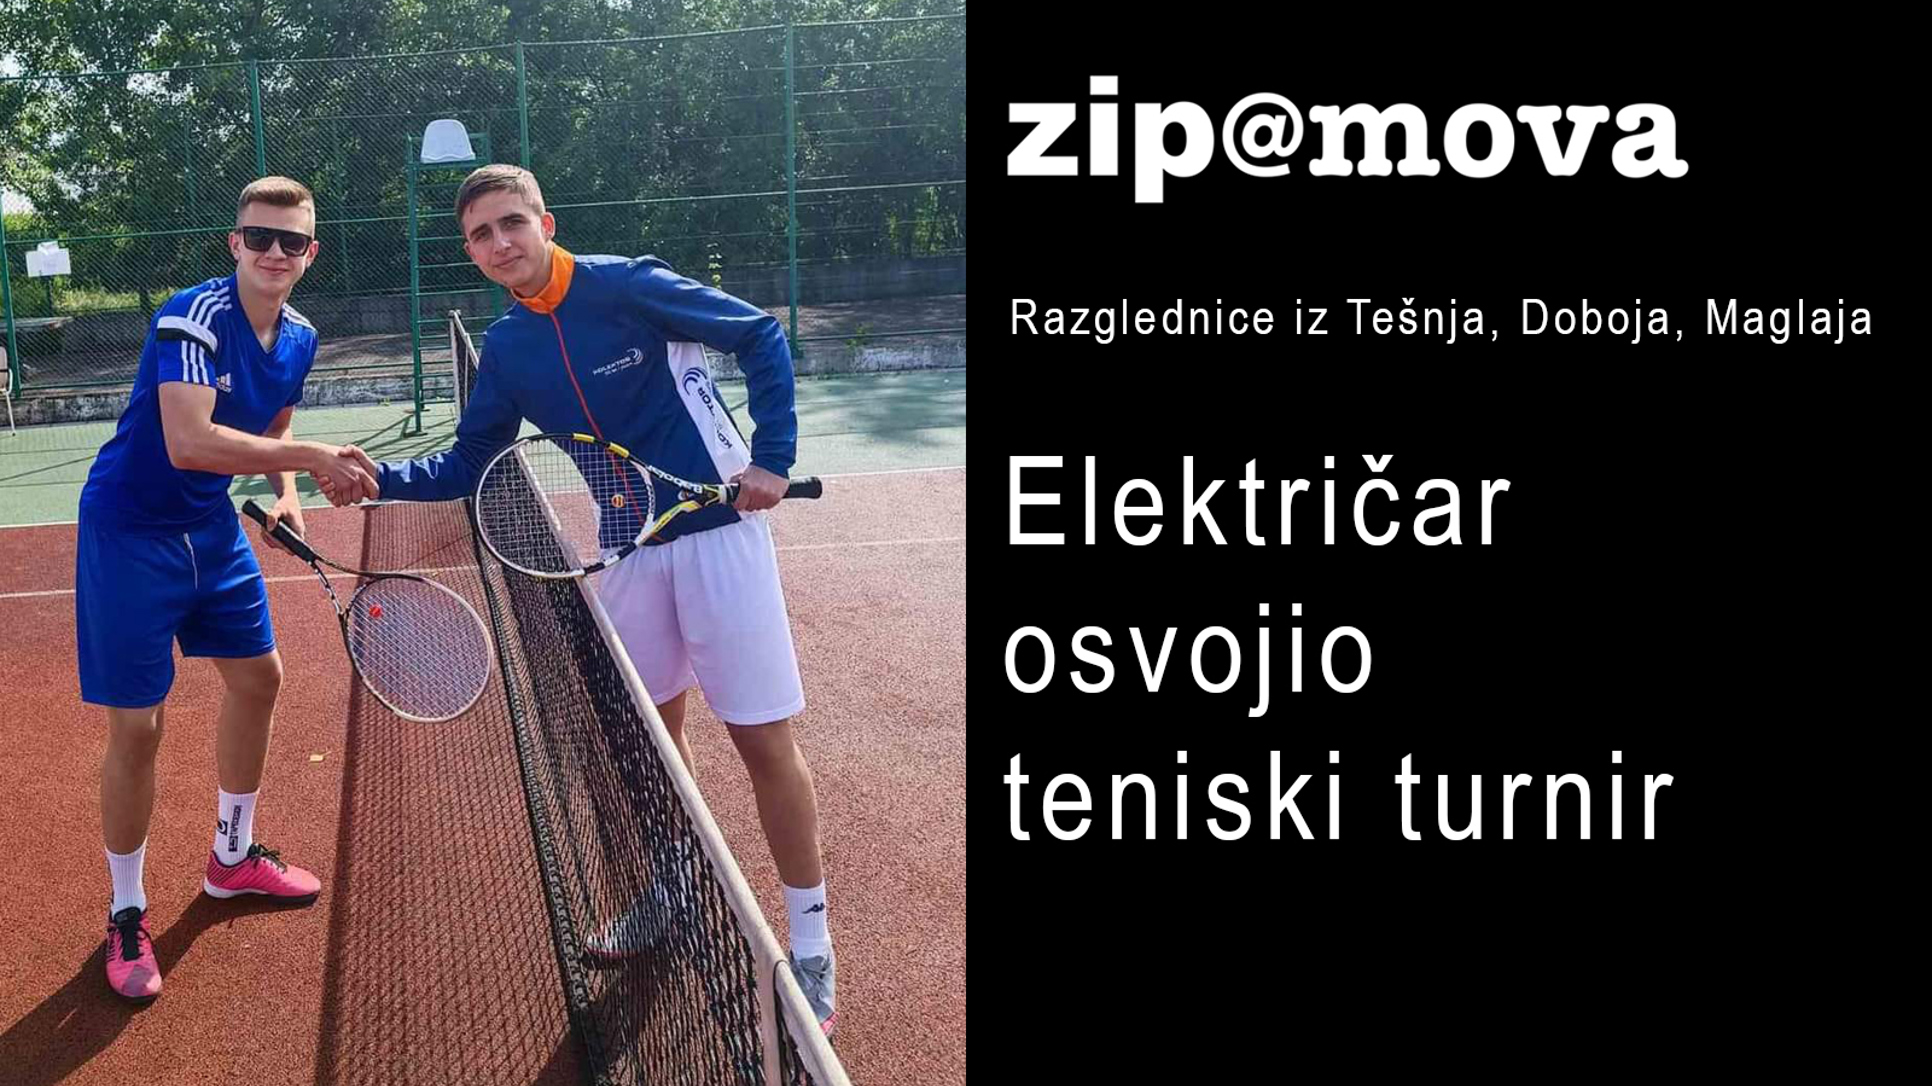 Električar osvojio teniski turnir